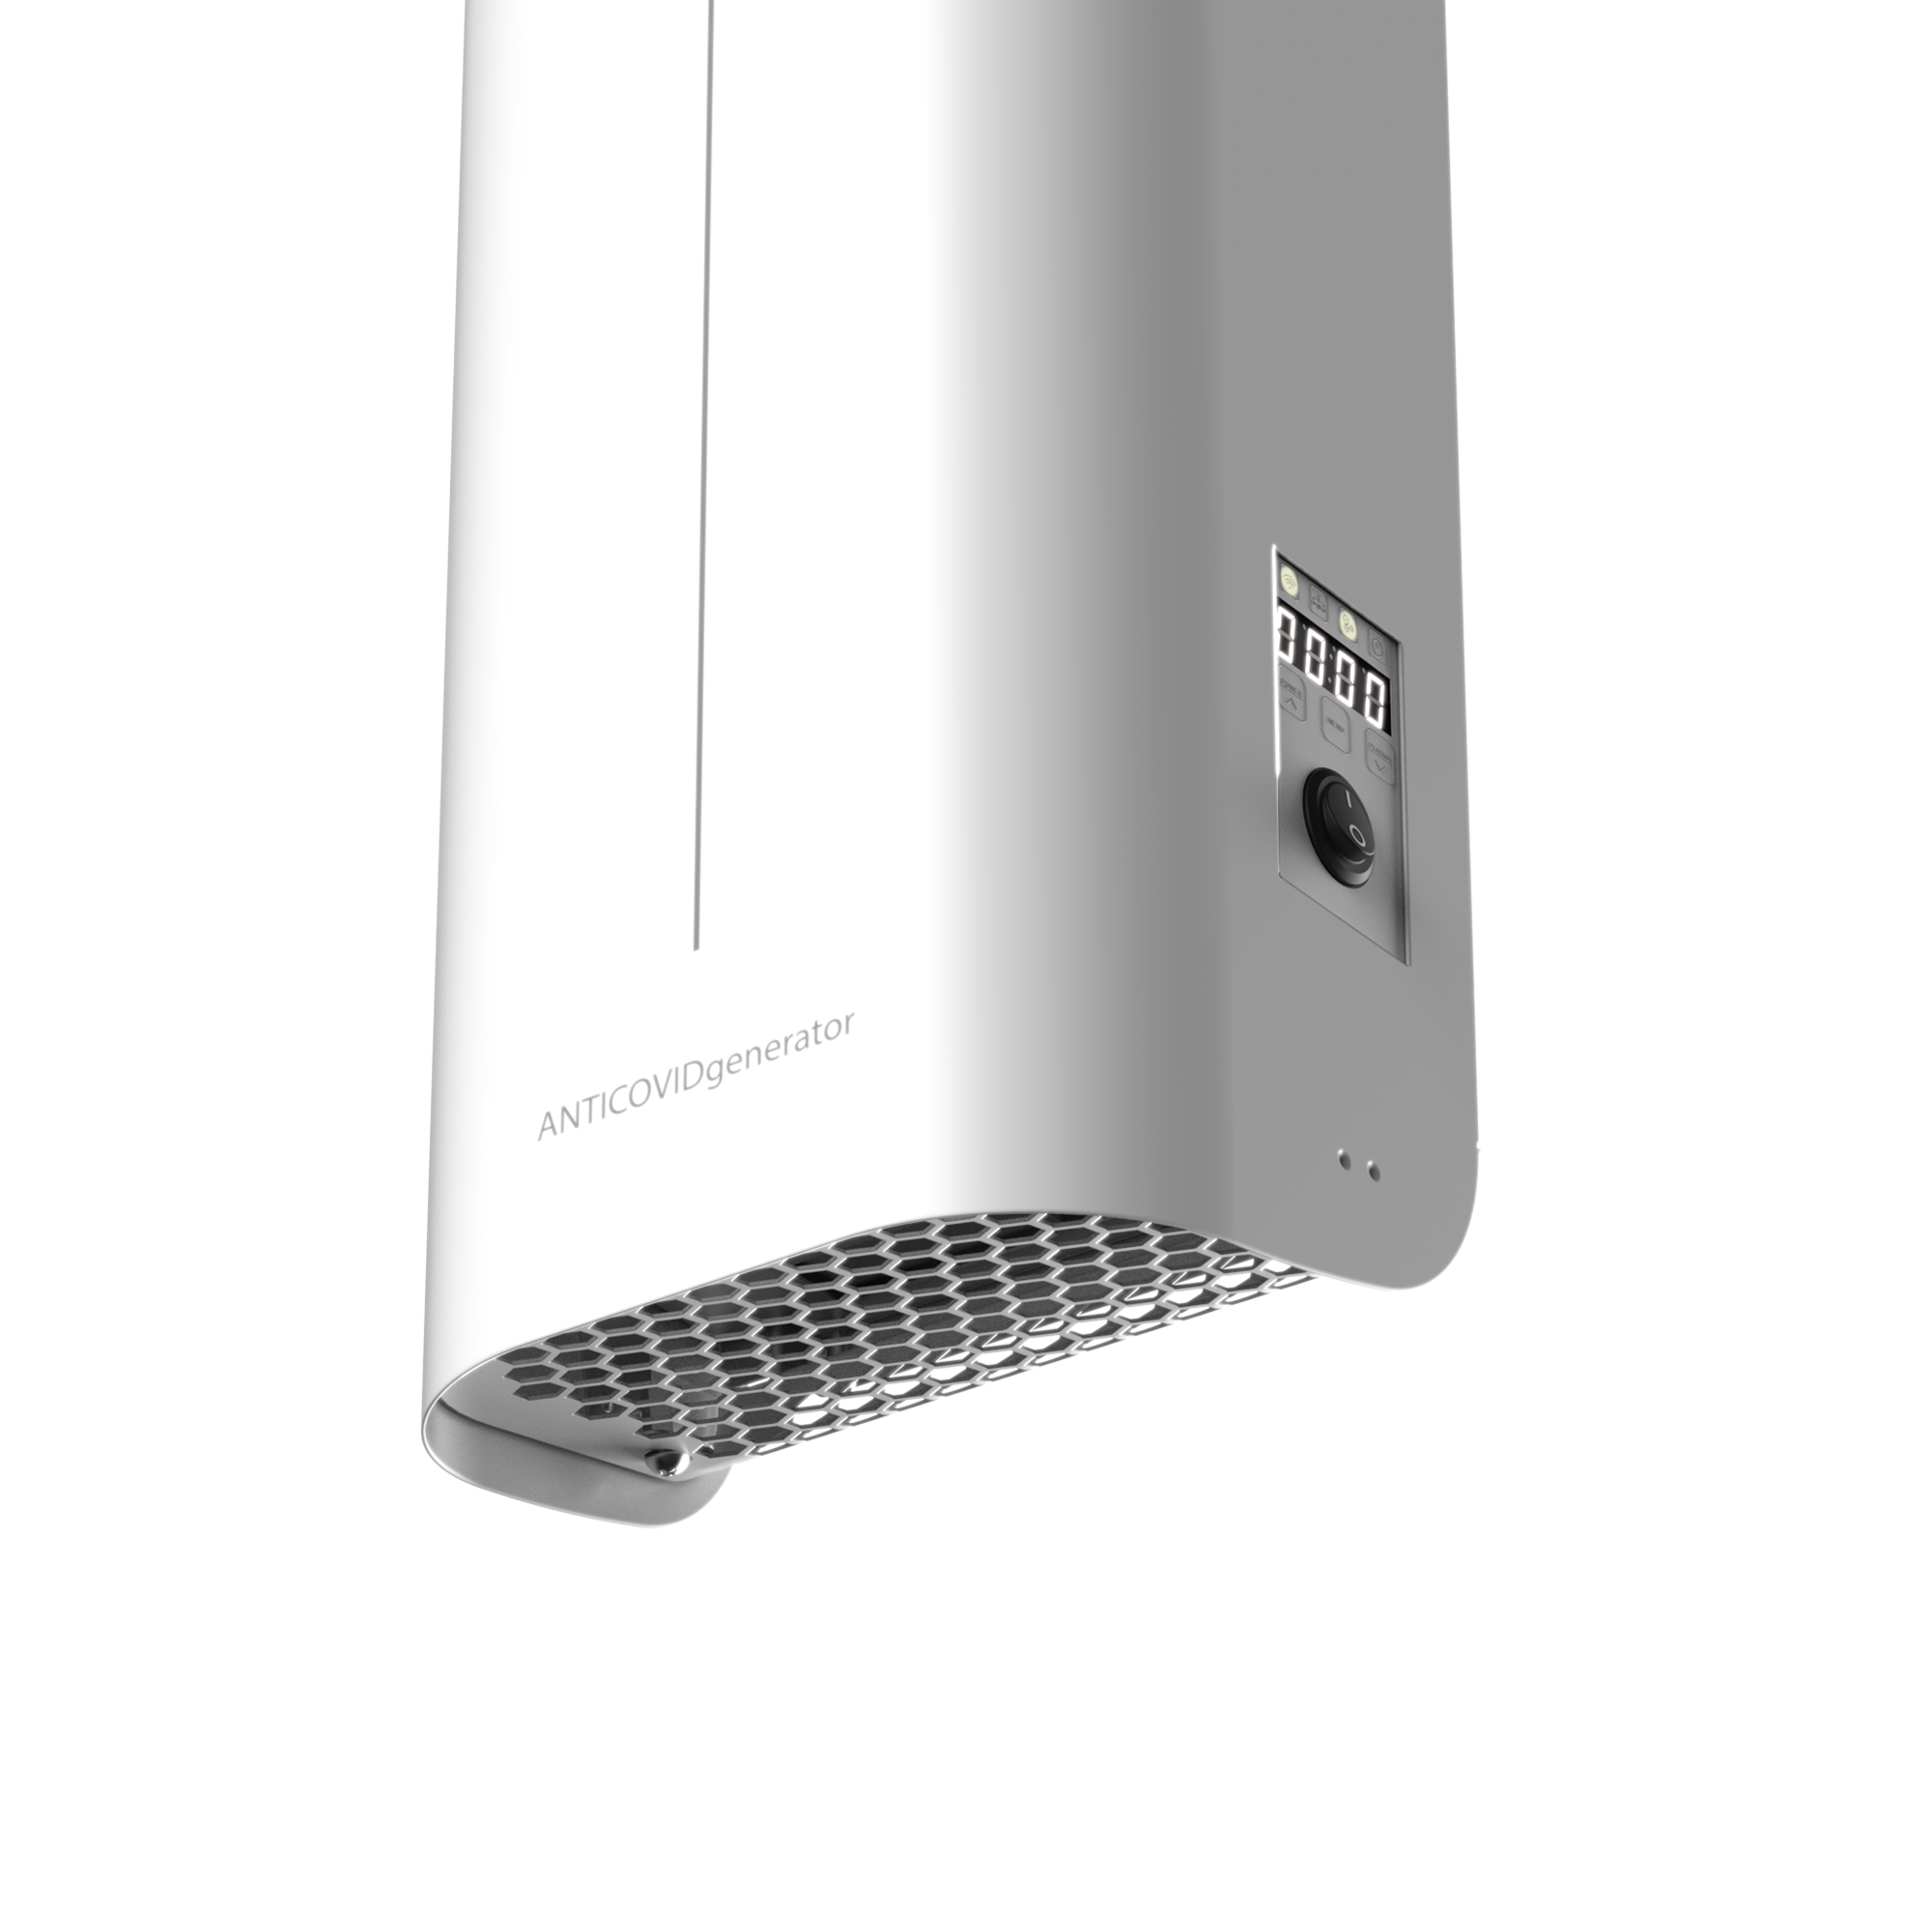 Бактерицидный рециркулятор BALLU RDU-30D WiFi ANTICOVIDgenerator, white от магазина ЛесКонПром.ру